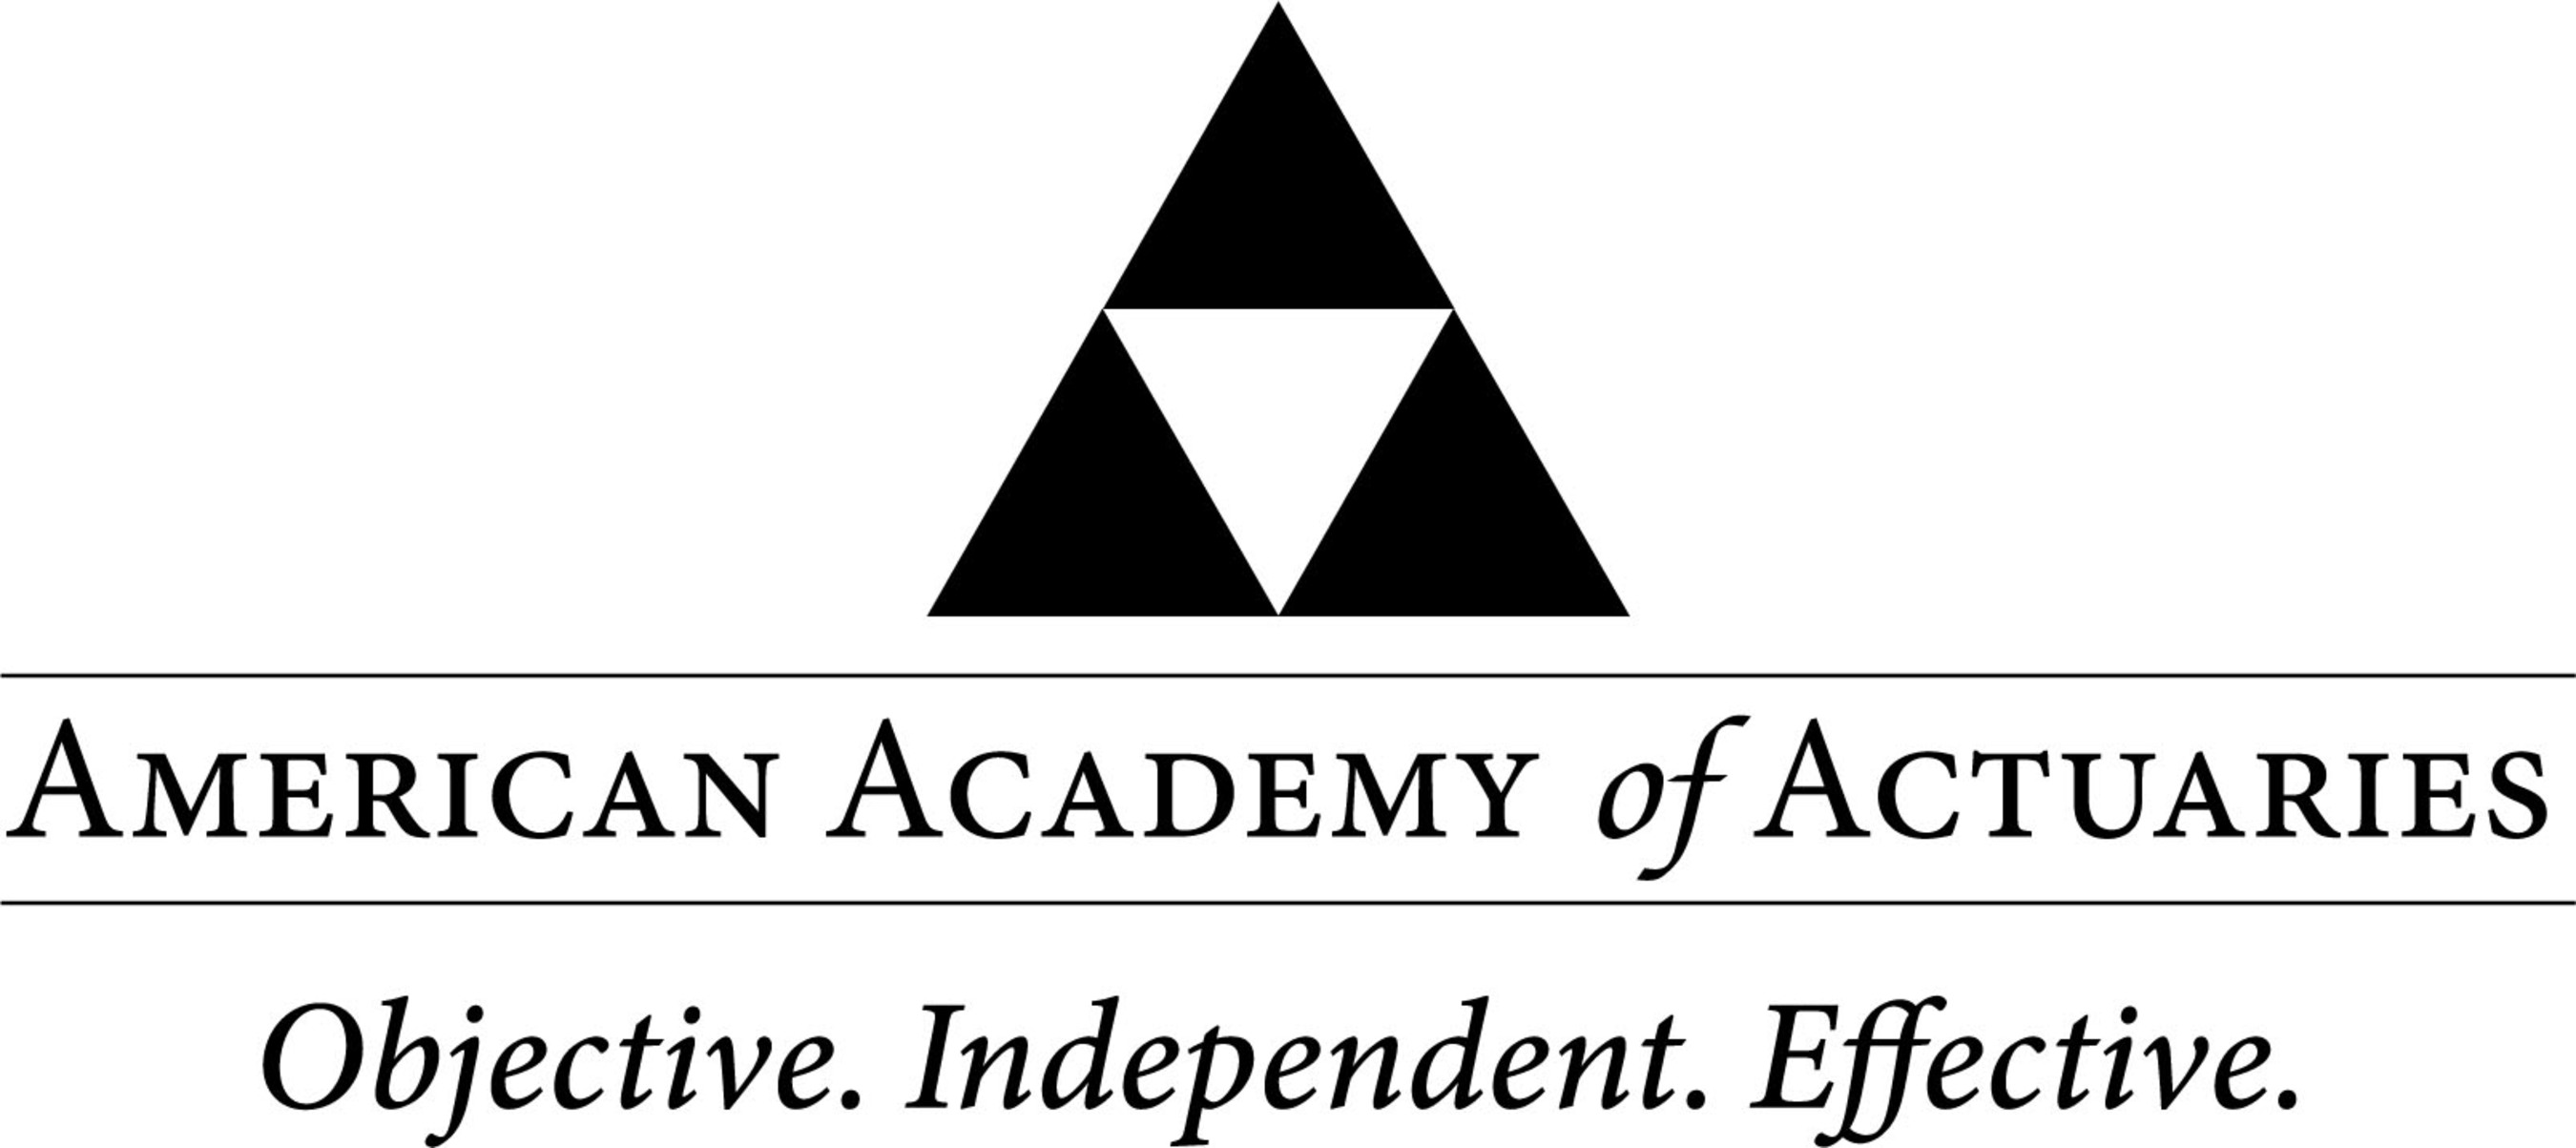 American Academy of Actuaries.